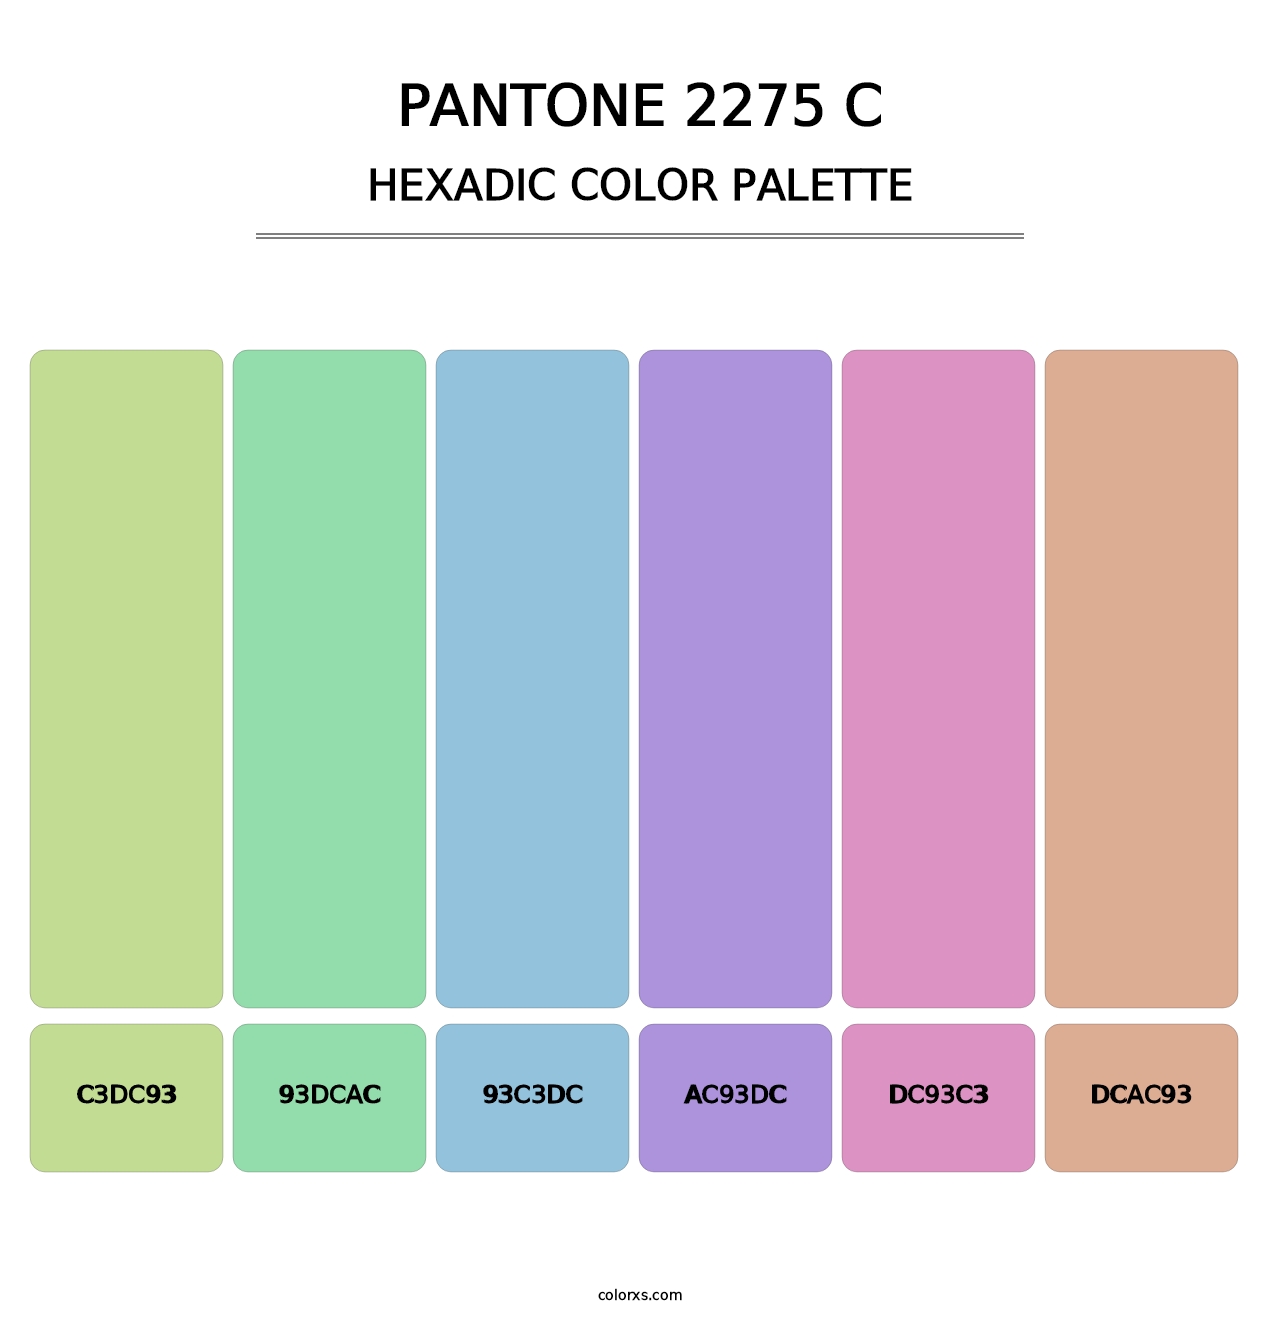 PANTONE 2275 C - Hexadic Color Palette